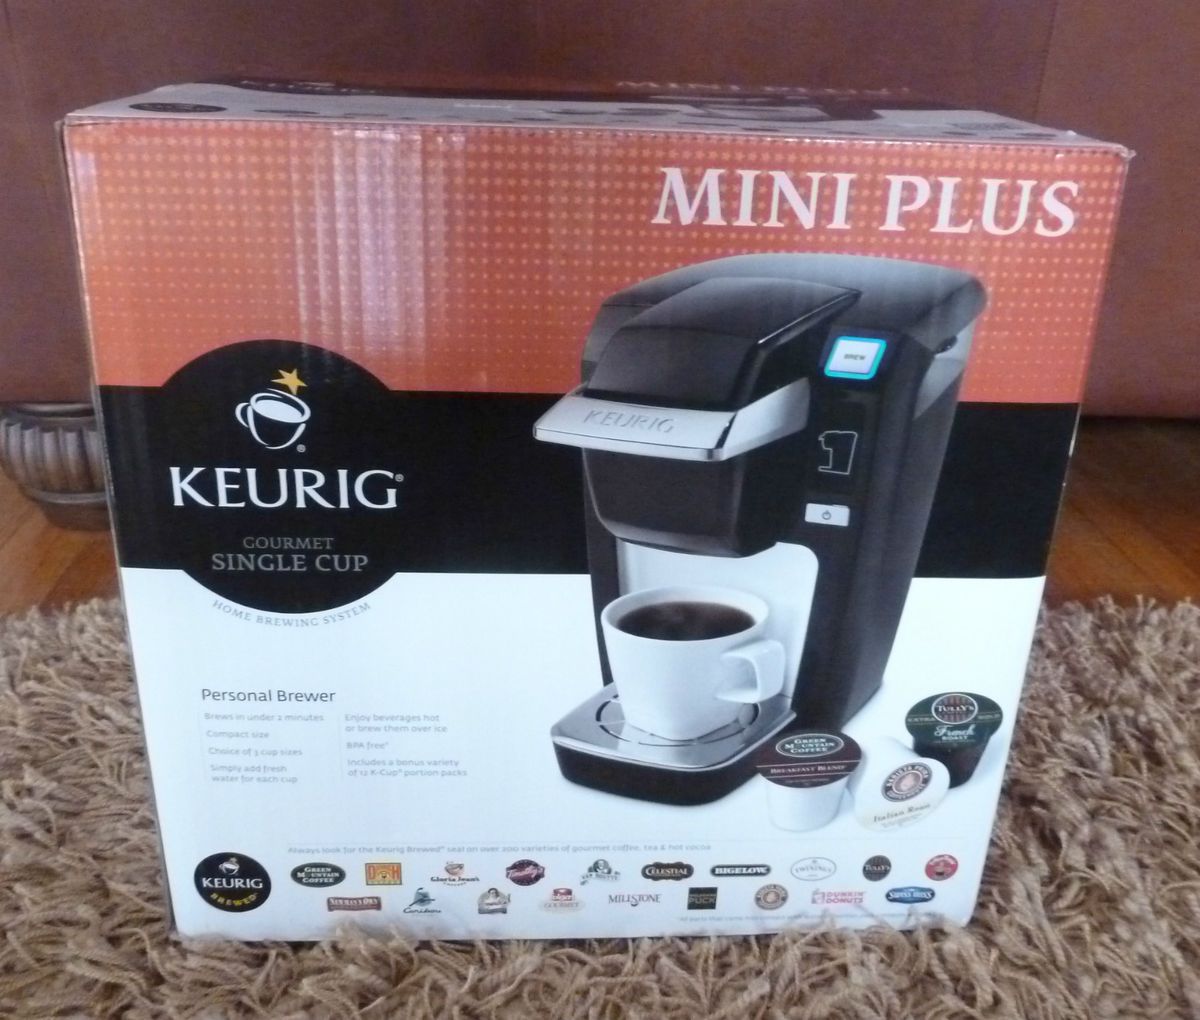  Mini Plus Personal Brewer Coffee Maker w 12 K Cups New in Box Black